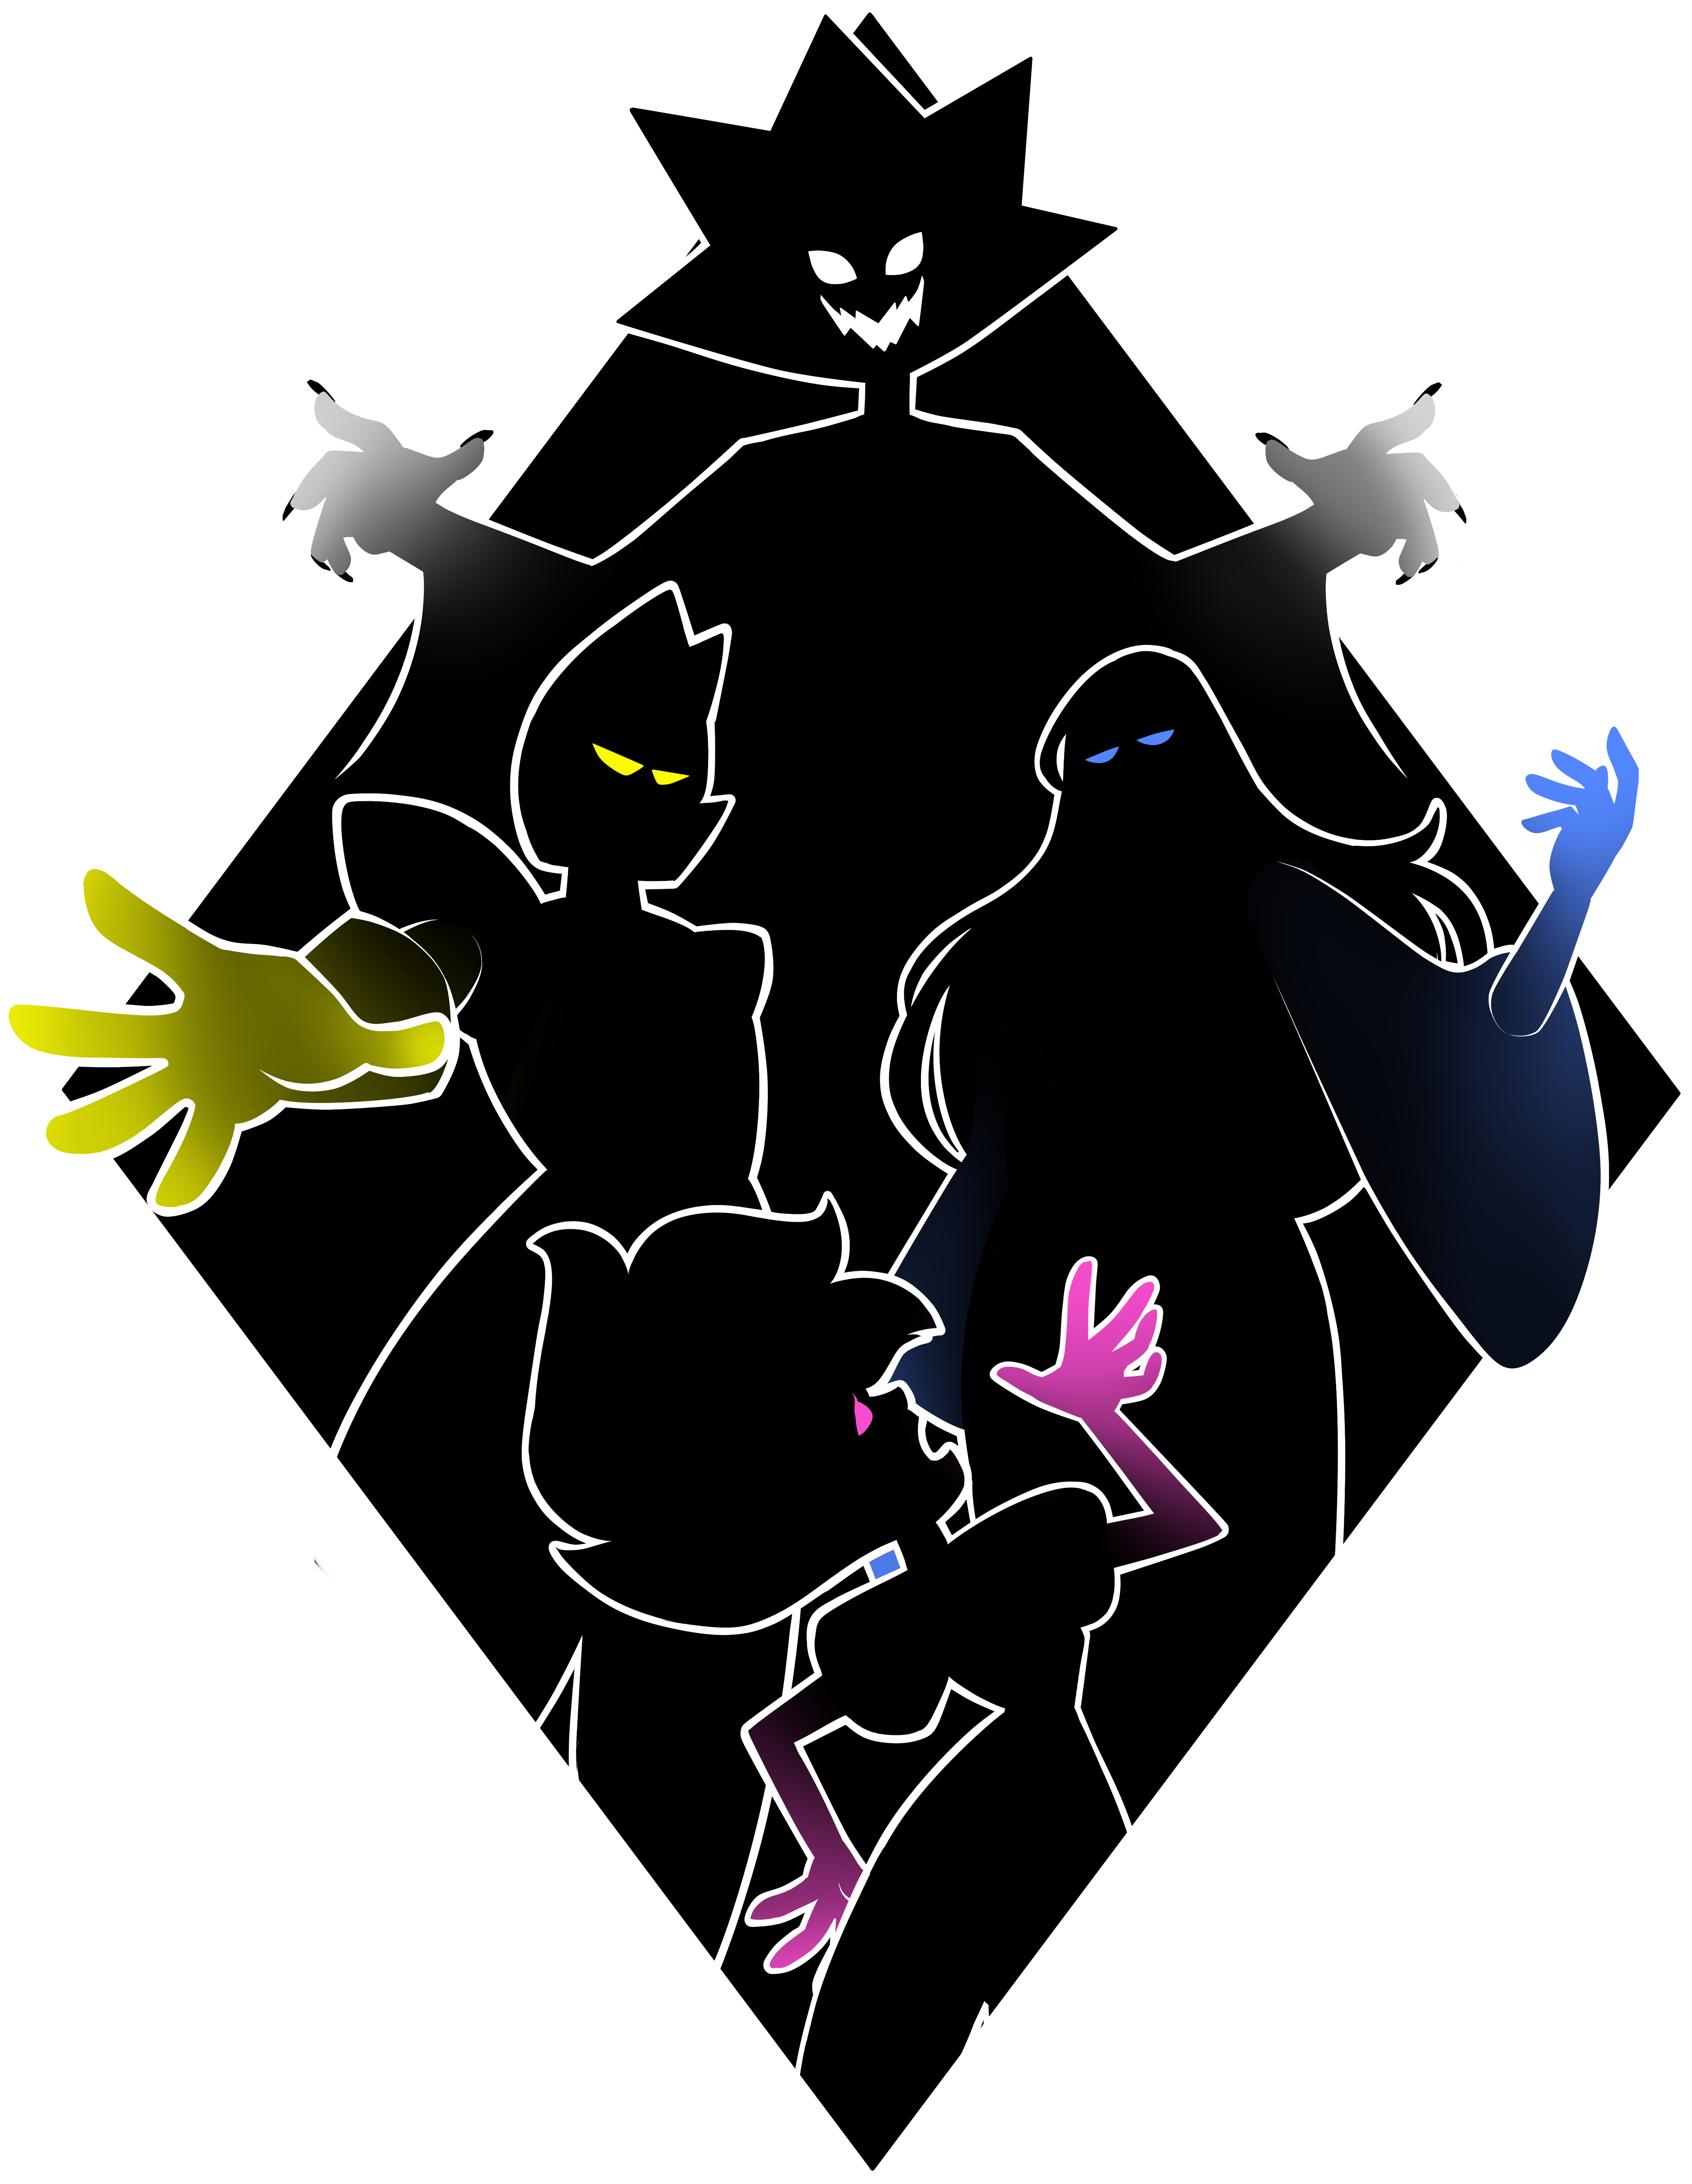 Black Diamond Samp server Logo by itsvostic on DeviantArt